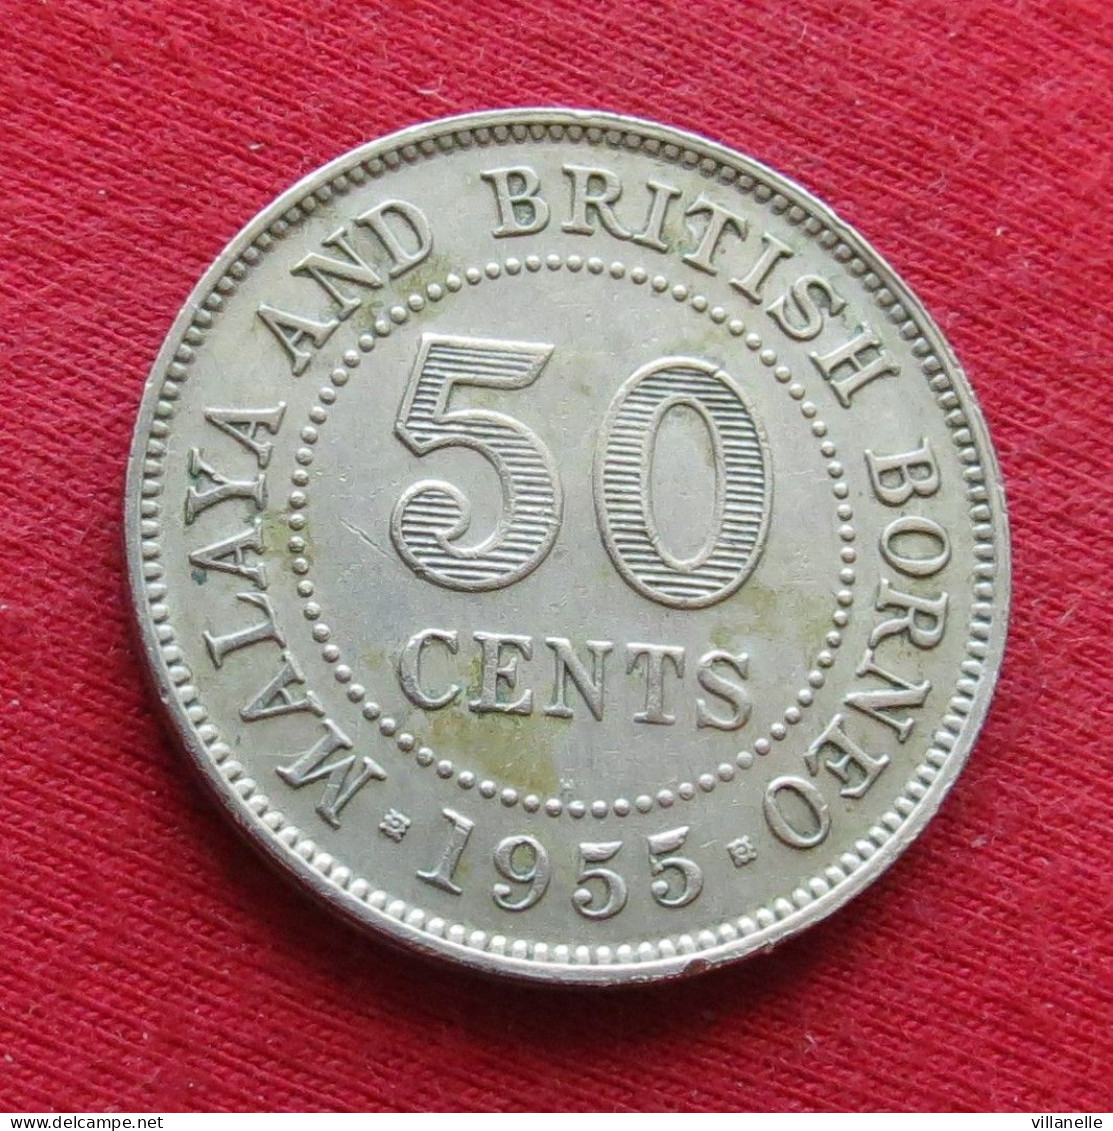 Malaya And British Borneo 50 Cents 1955 H W ºº - Malaysie